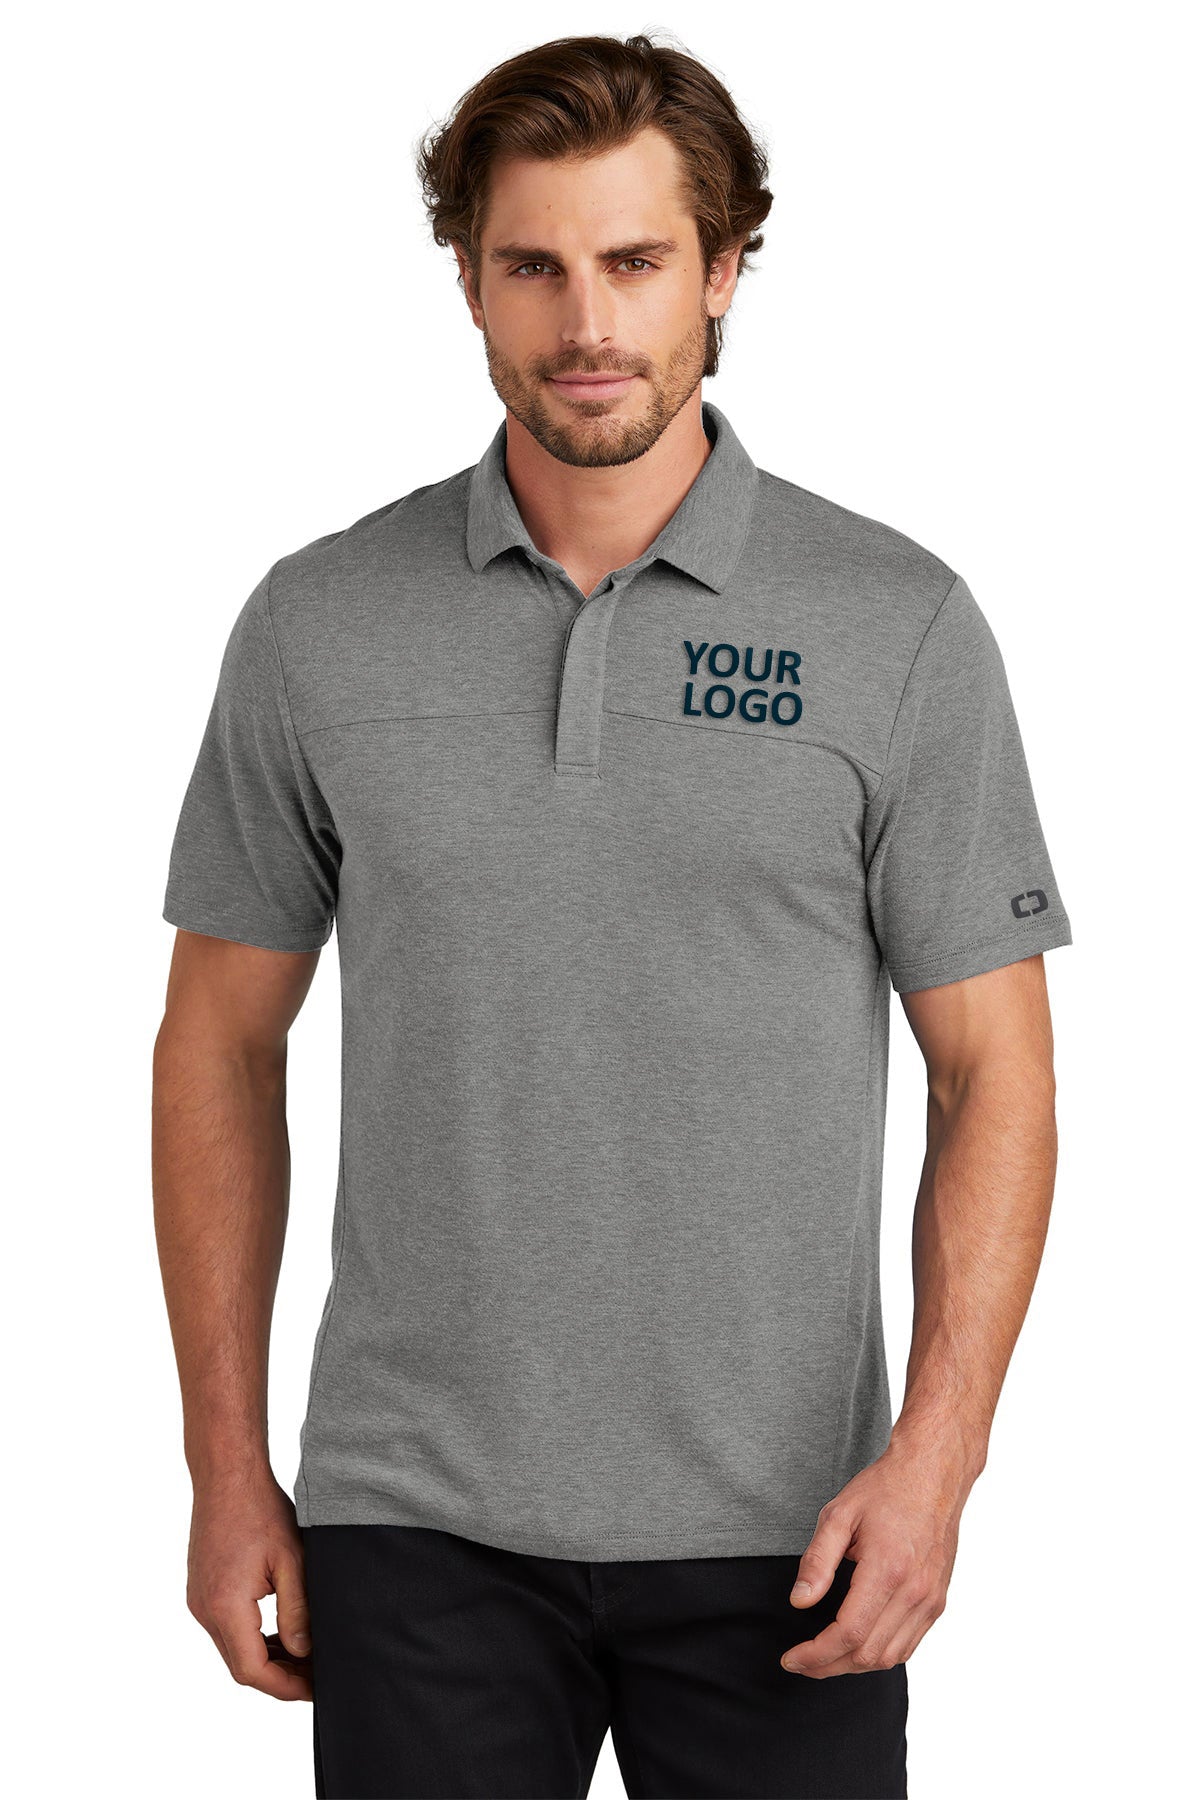 OGIO Gear Grey OG150 custom logo polo shirts